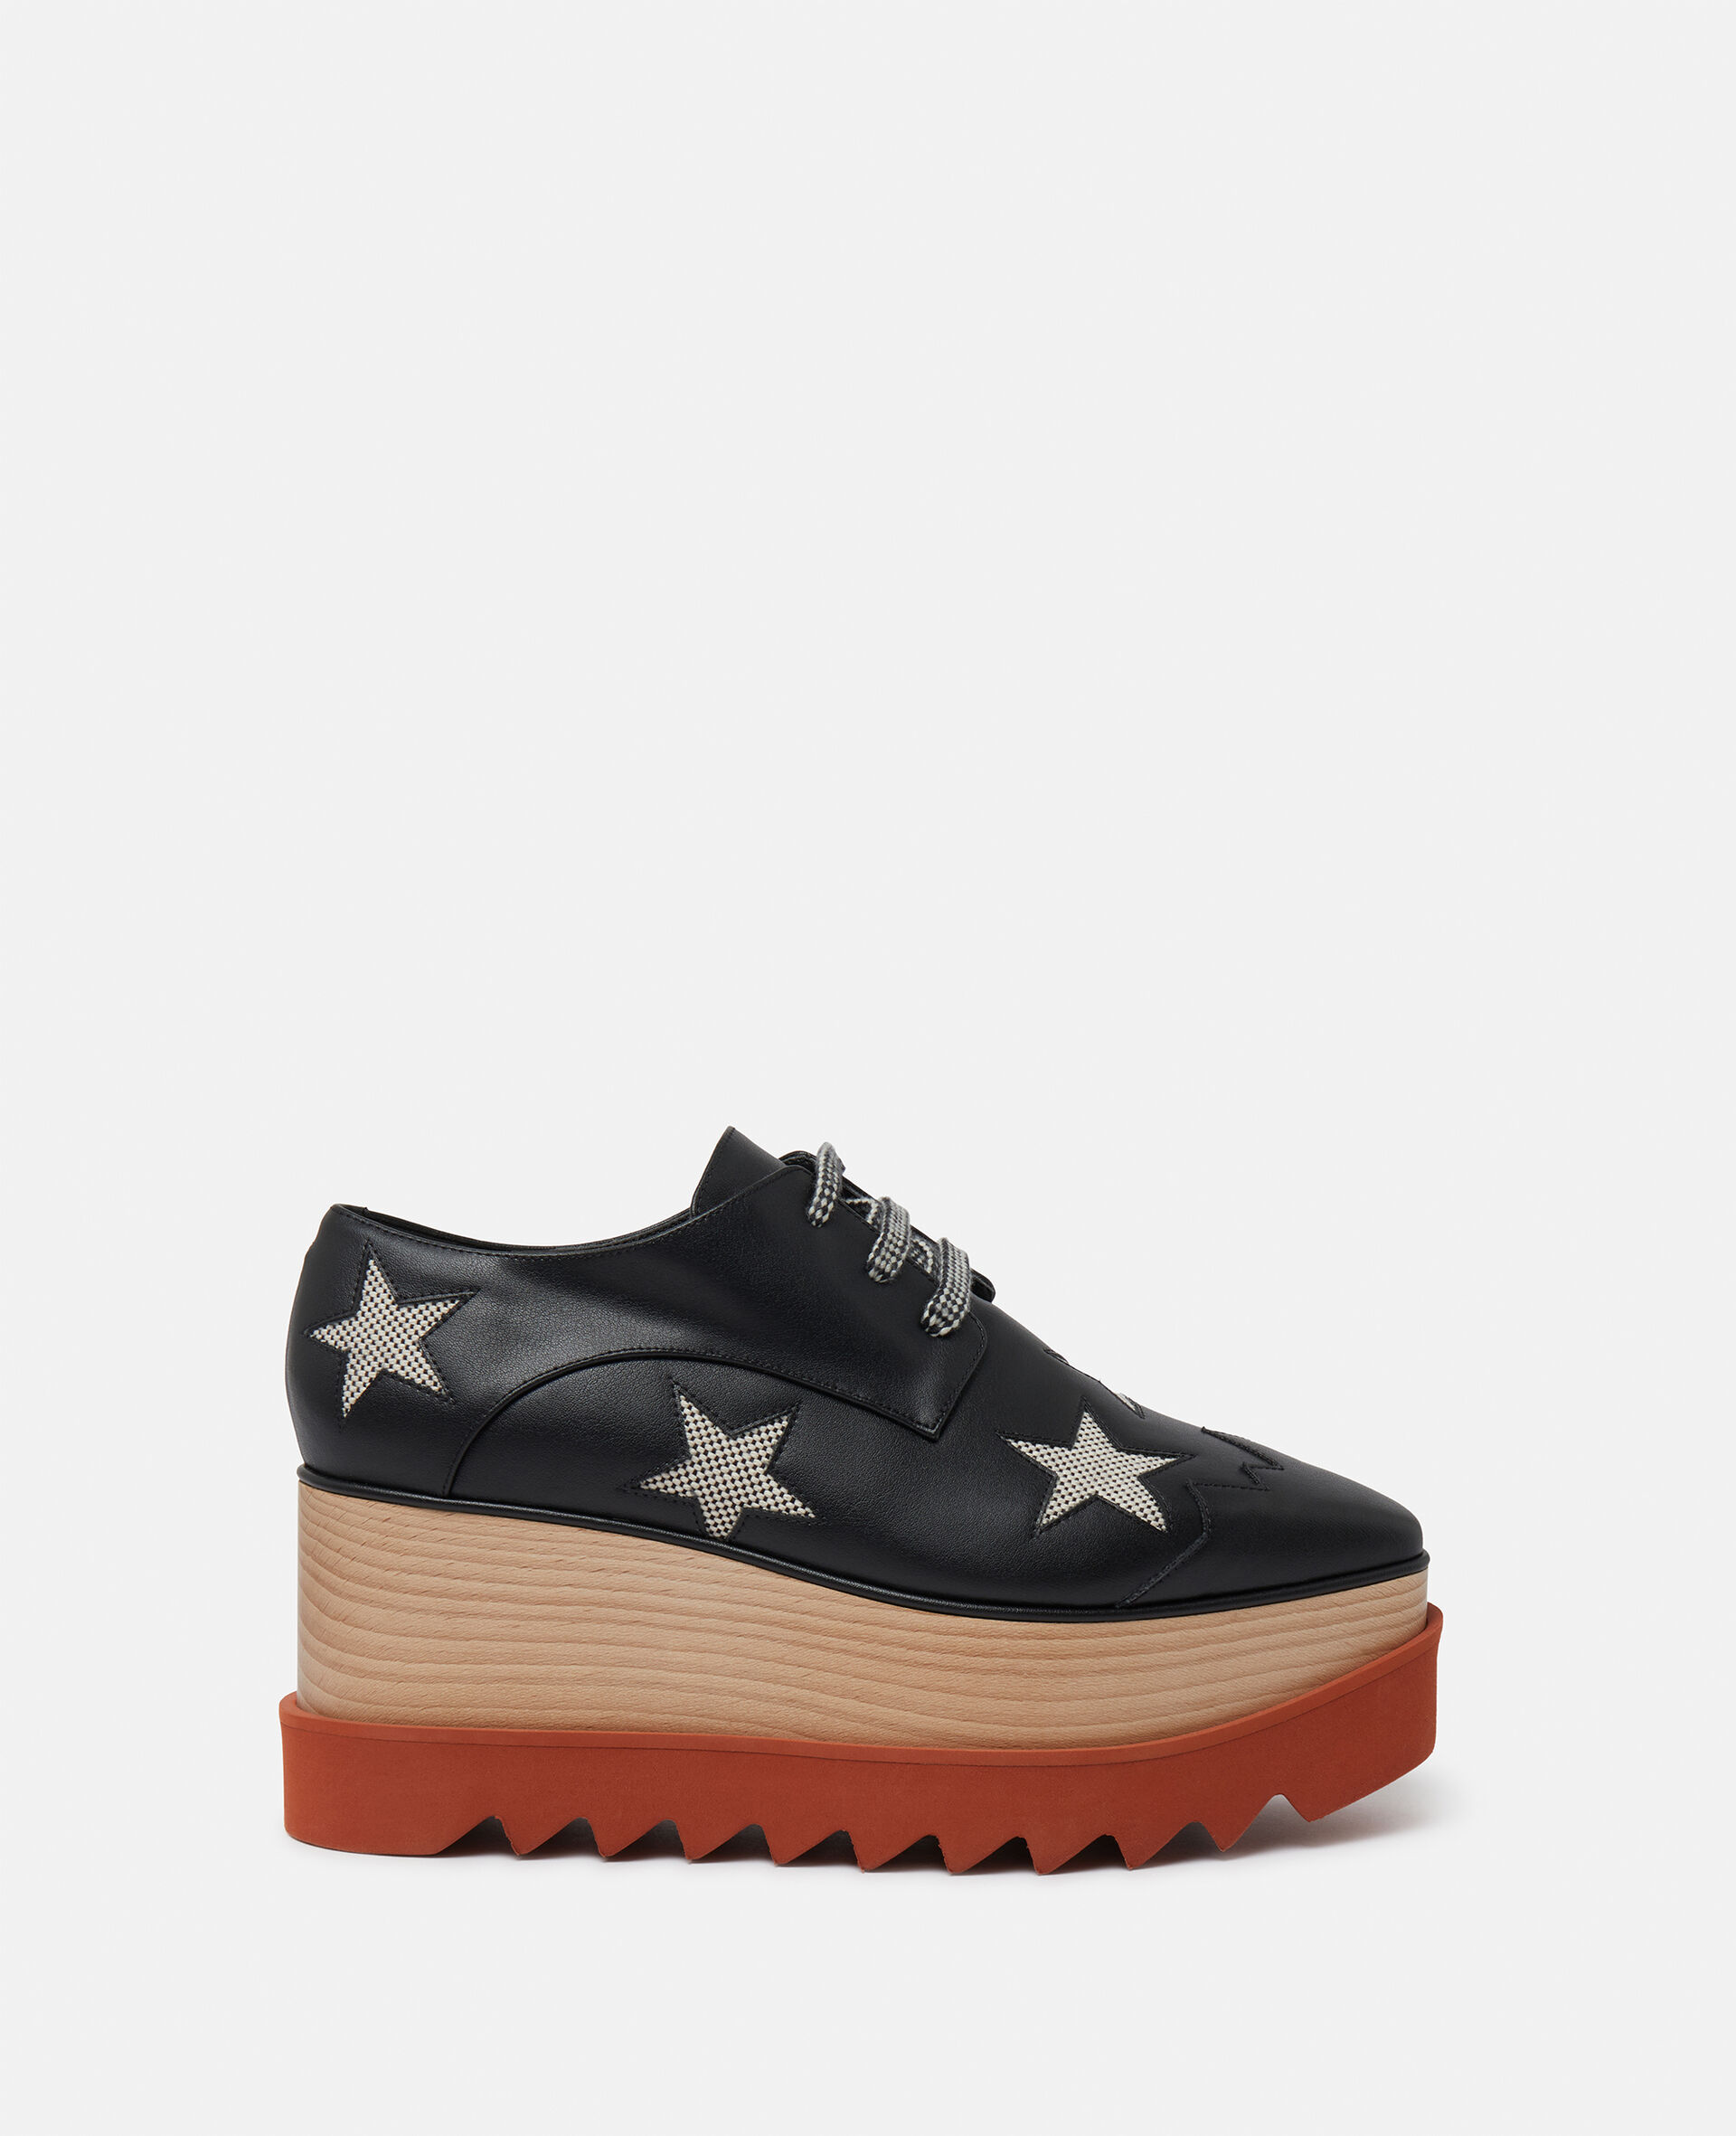 Elyse Stars Platform Shoes-Multicolour-large image number 0